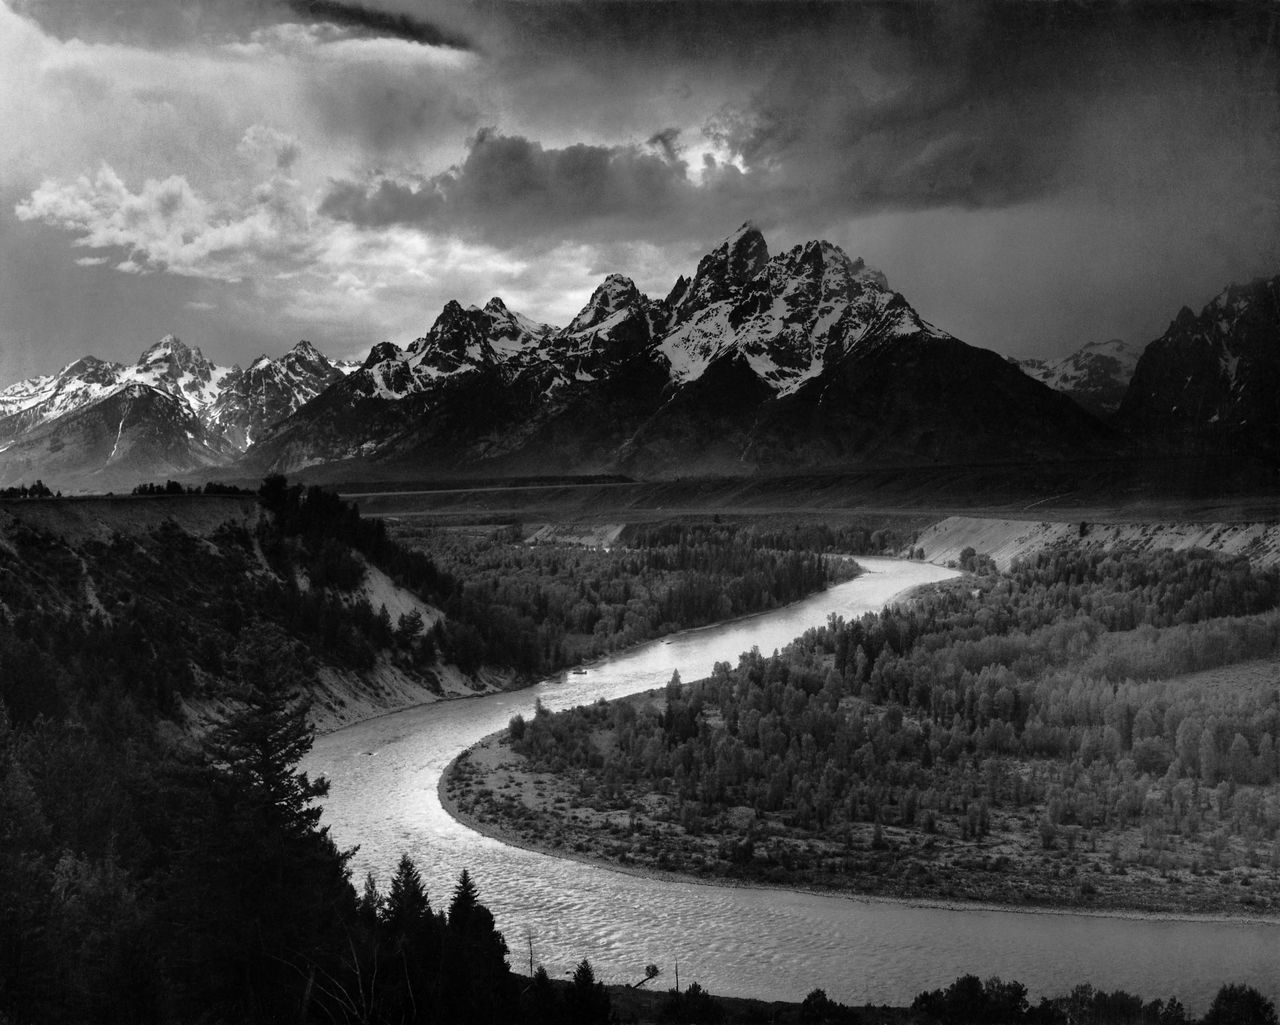 Zdjęcie "The Tetons and the Snake River" autorstwa Ansela Adamsa.